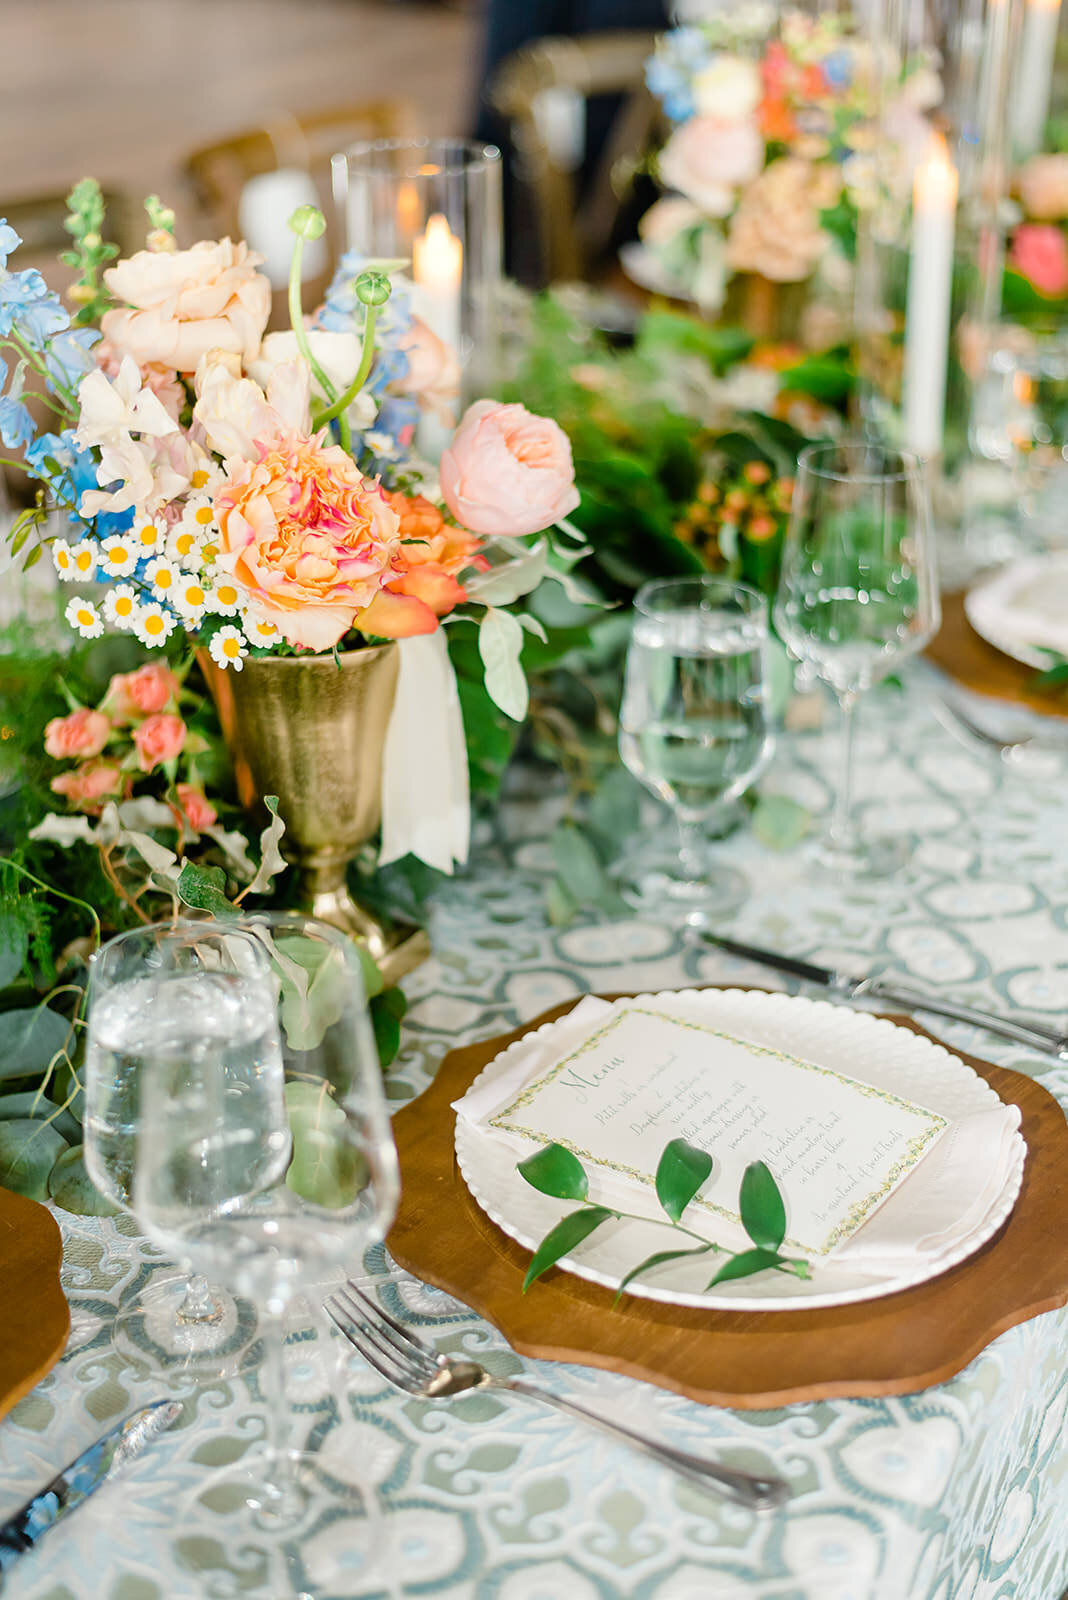 Wedding reception dinner table